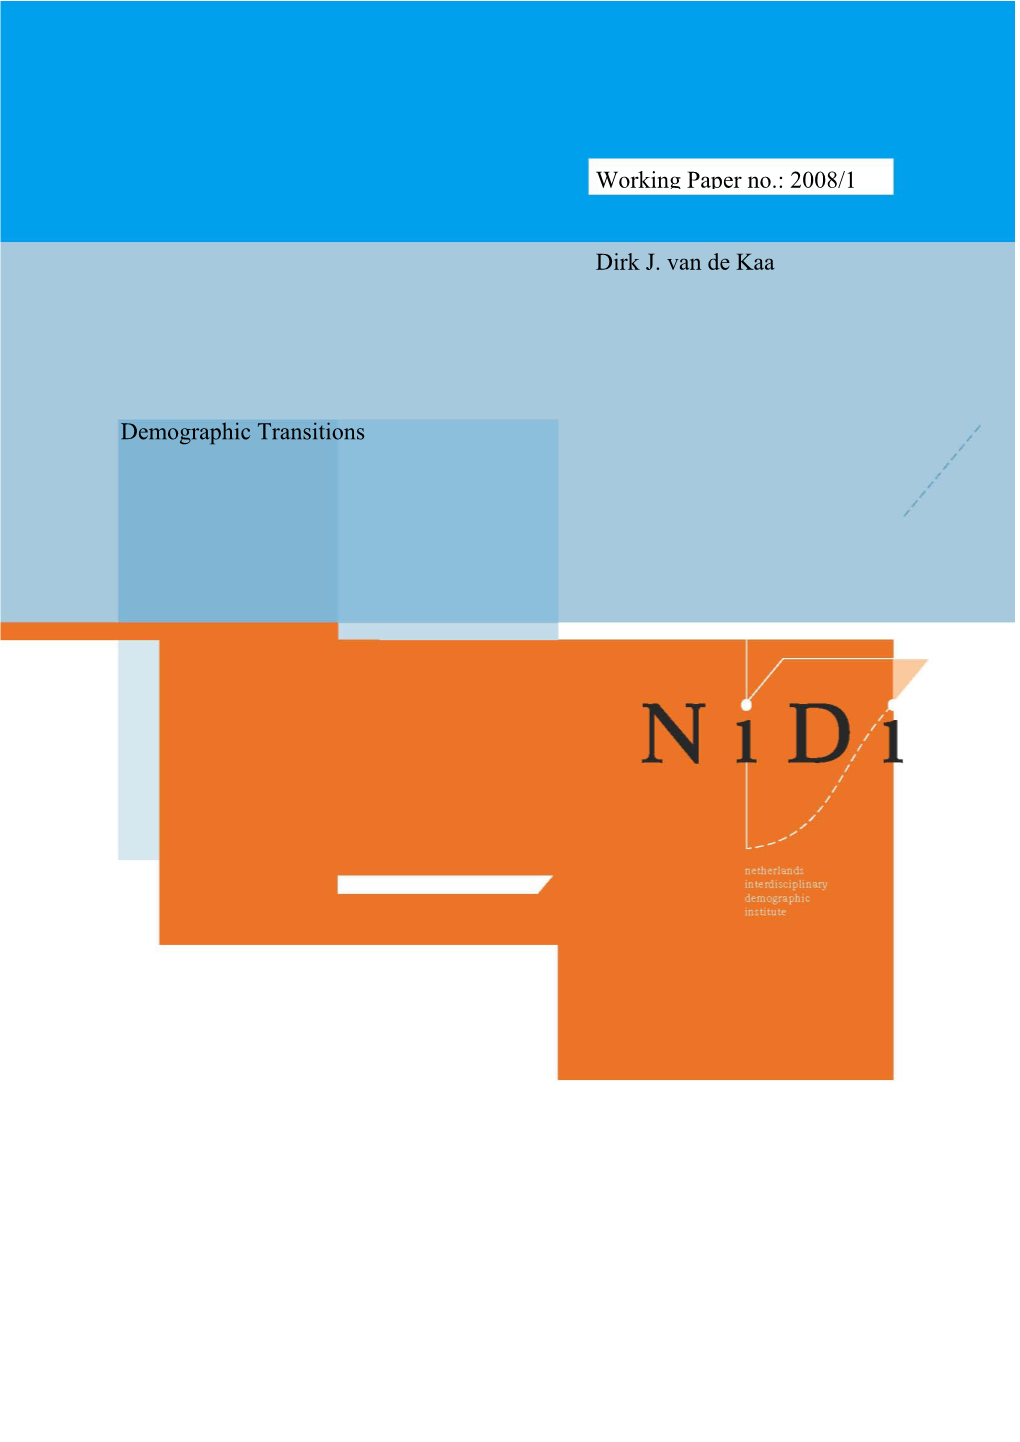 NIDI Working Paper No. 2008/1